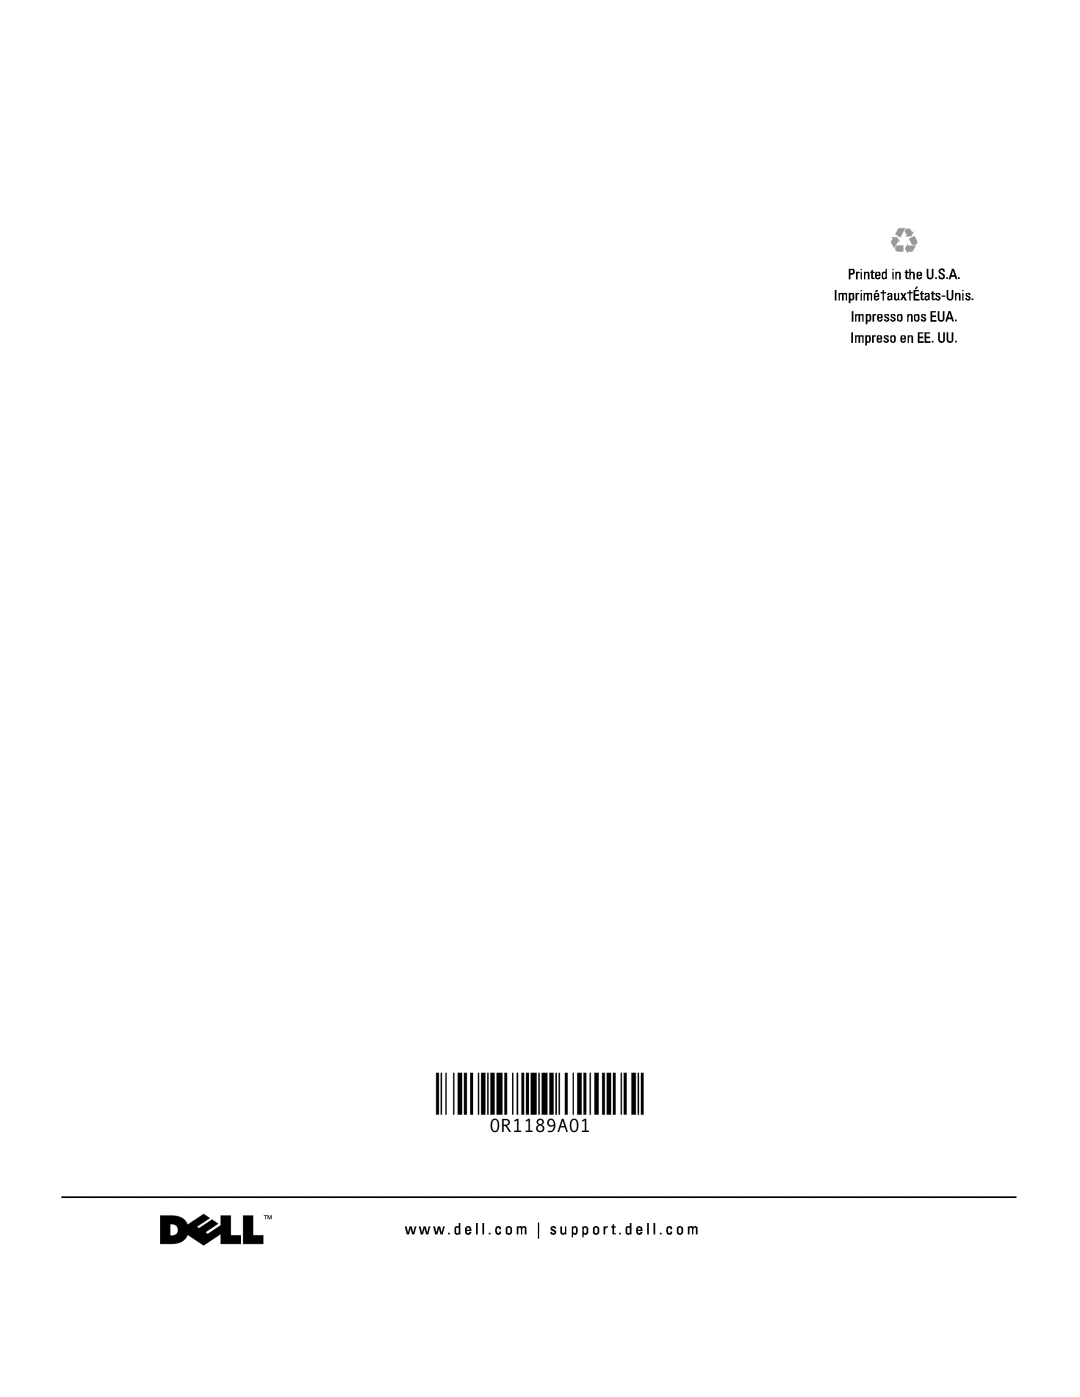 Dell D505 manual 0R1189A01, Printed in the U.S.A Imprimé†aux†États-Unis Impresso nos EUA, Impreso en EE. UU 